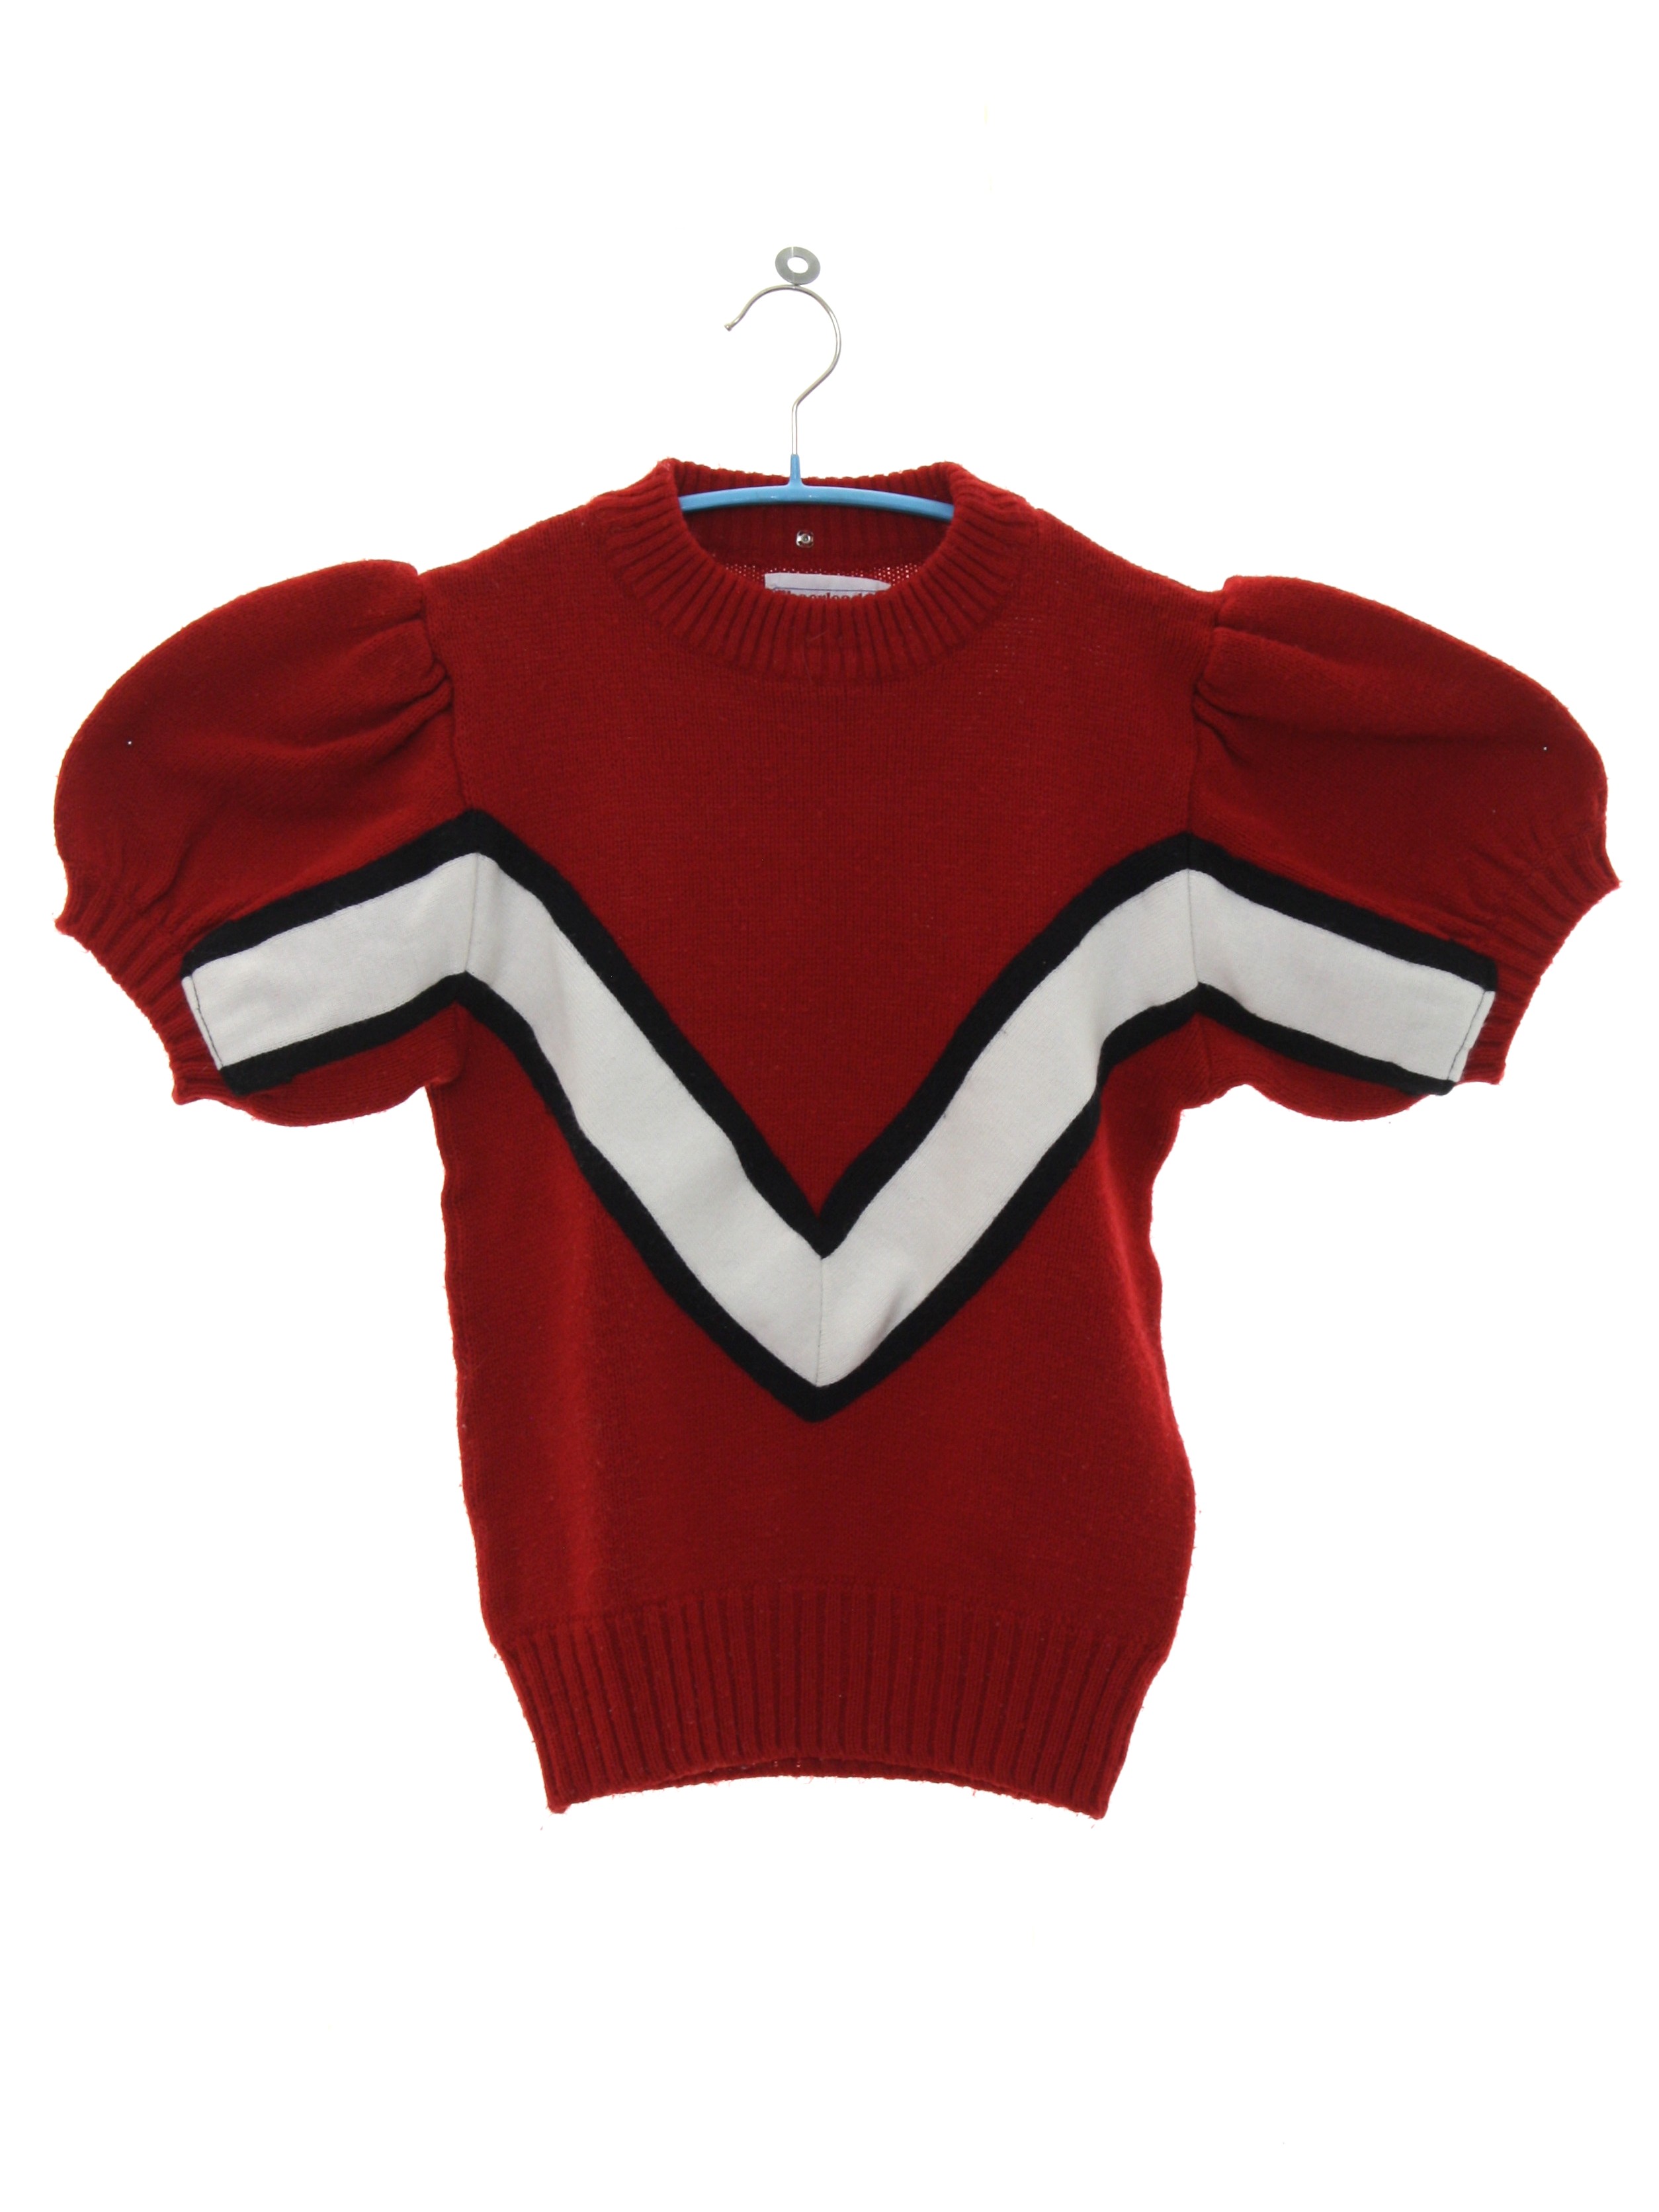 Retro 80s Knit Shirt (Cheerleader Supply) : 80s -Cheerleader Supply ...